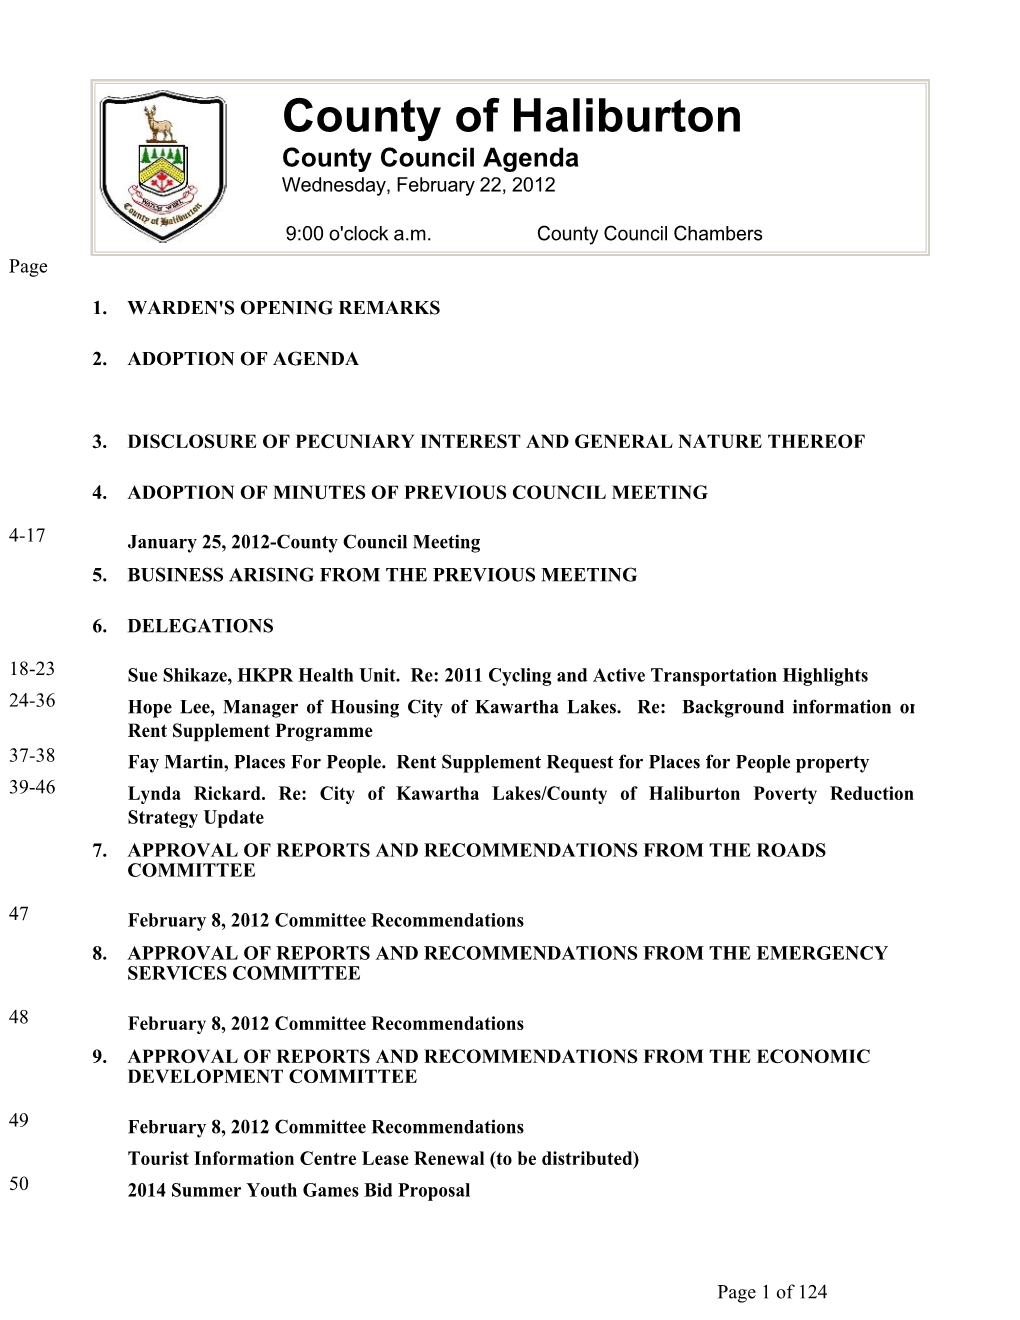 County of Haliburton County Council Agenda Wednesday, February 22, 2012